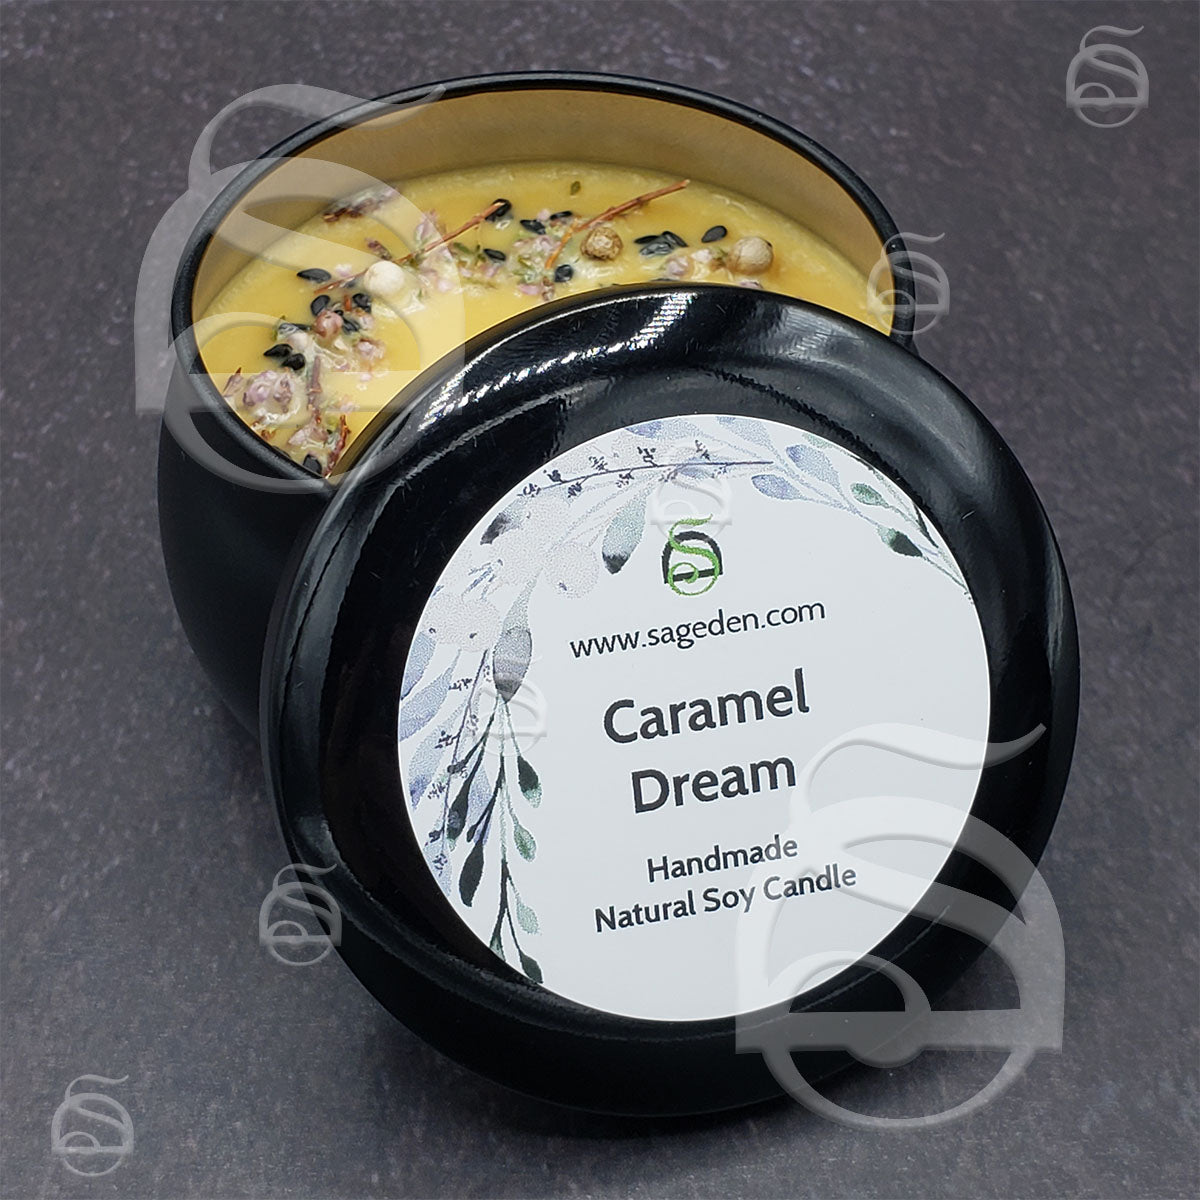 Caramel Dream Candle & Wax Melt (Sage Den Product)